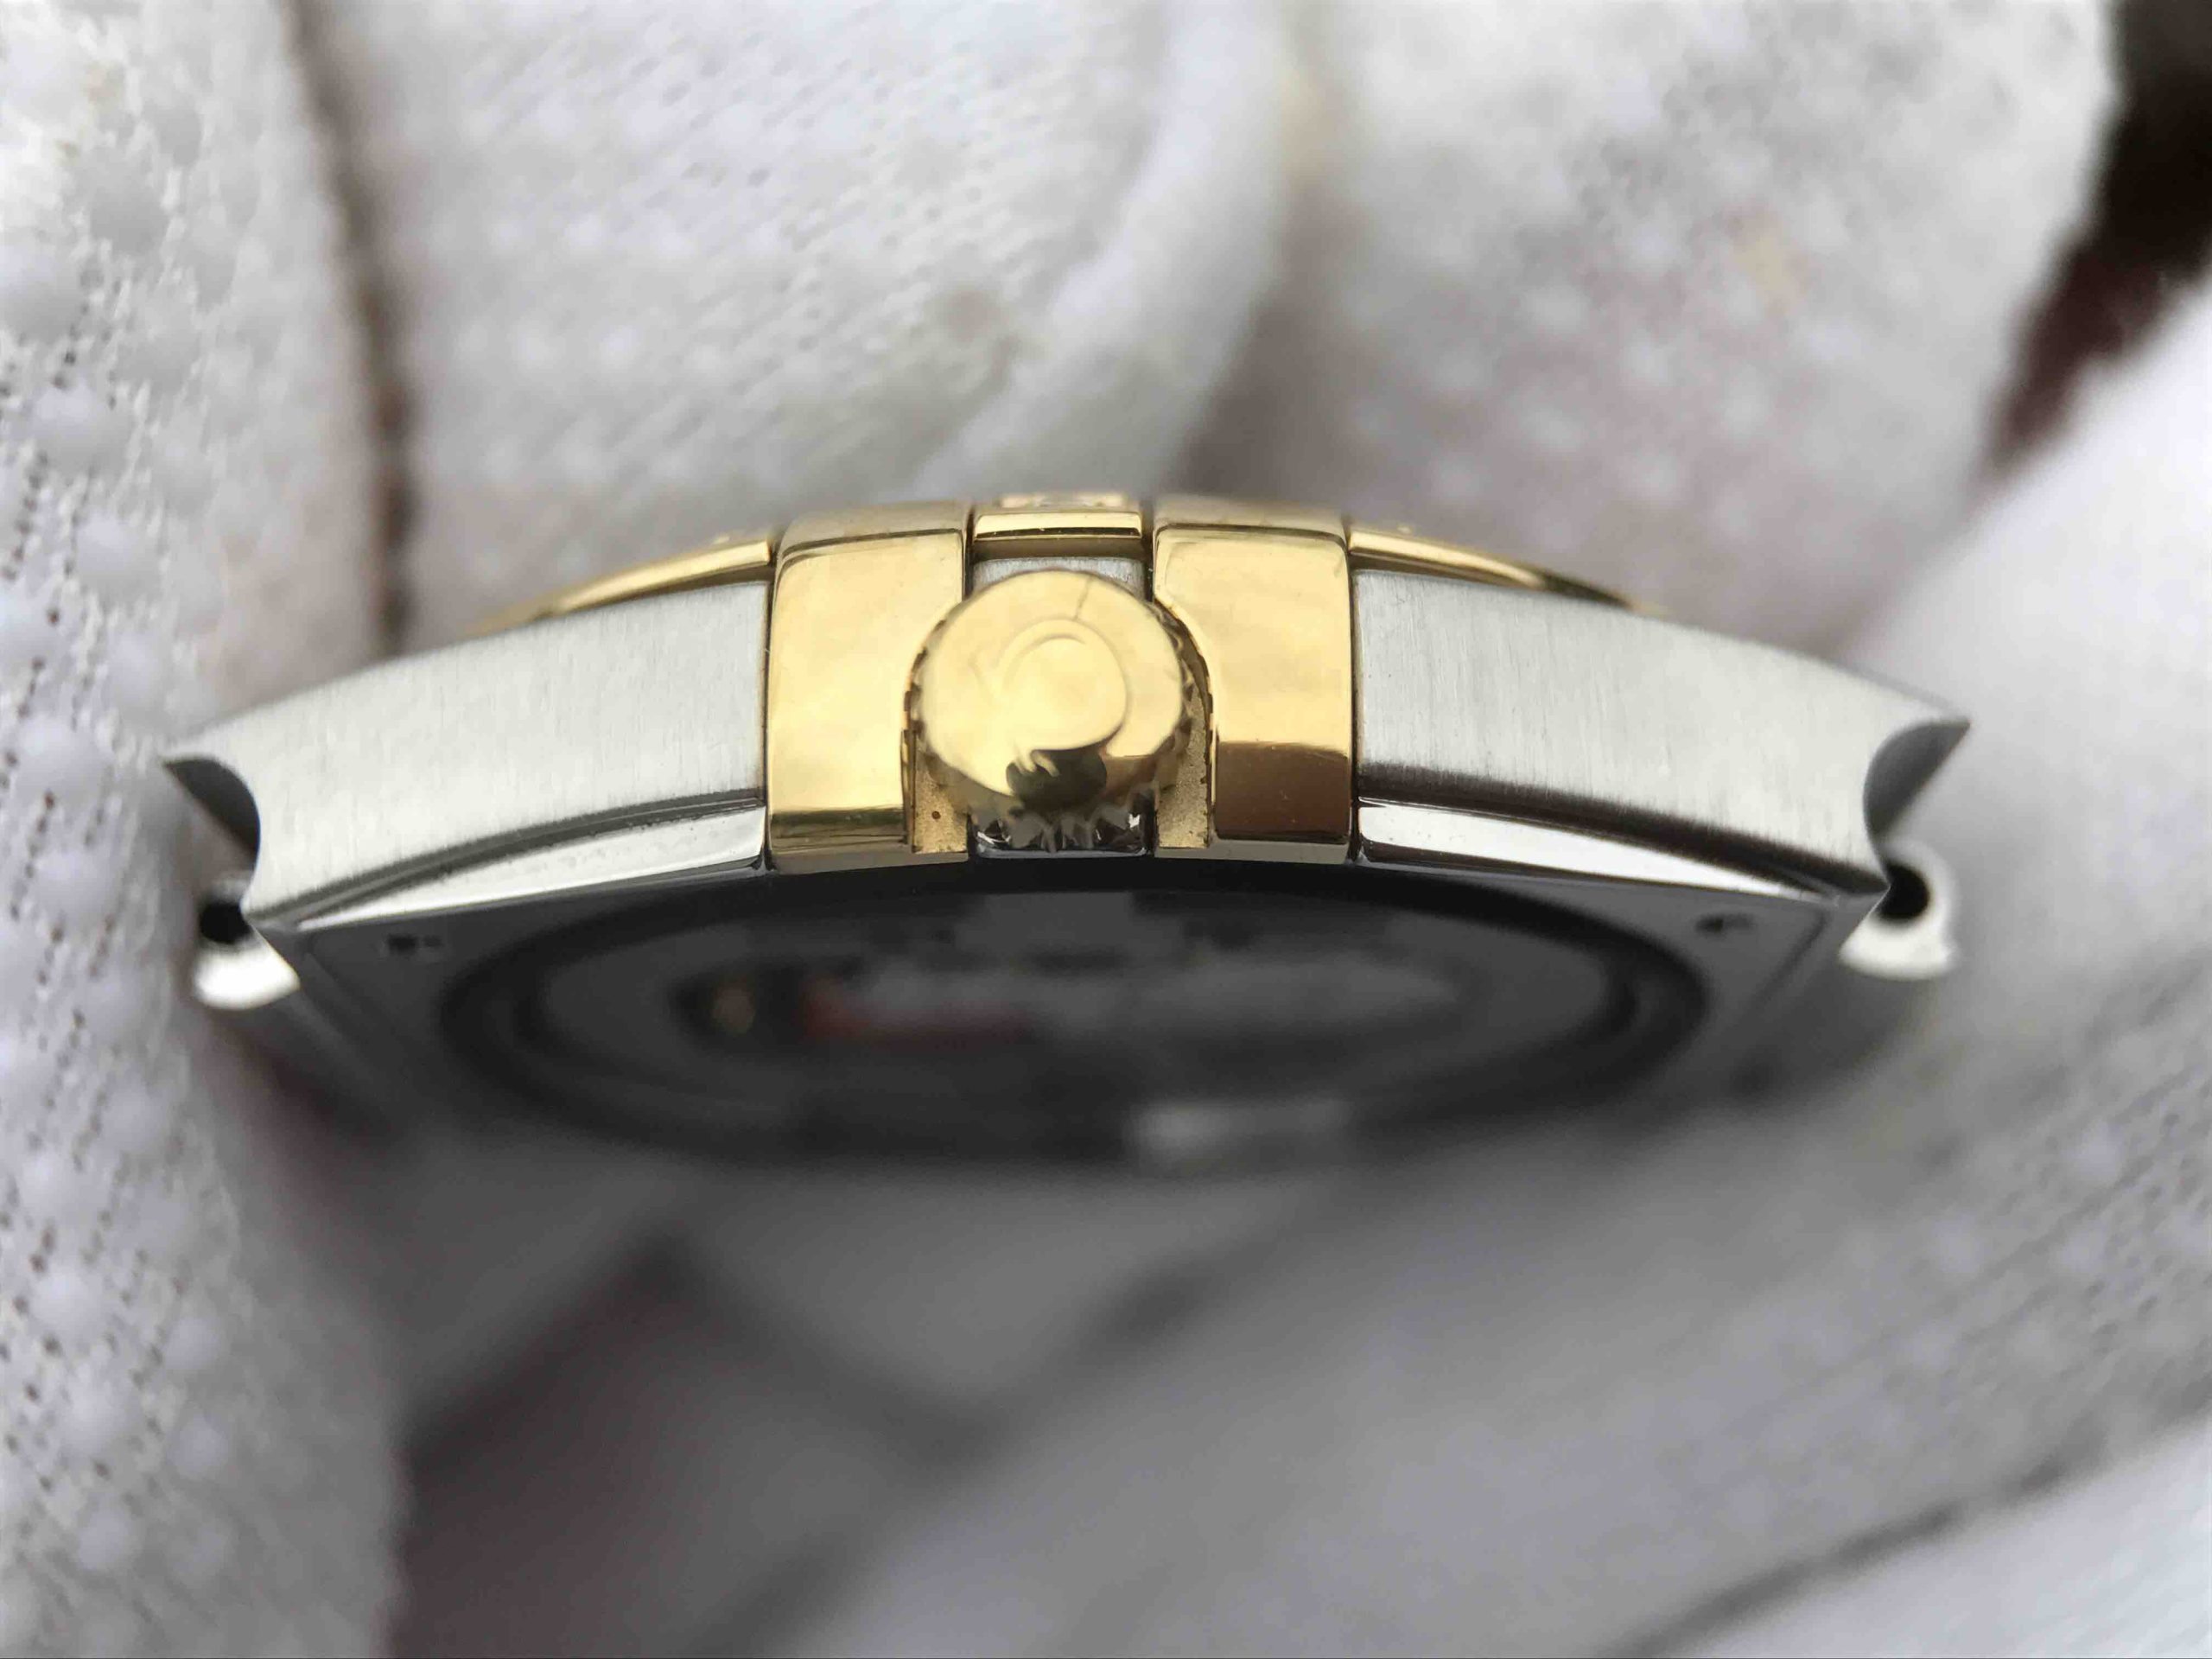 2023081002192478 scaled - 高仿手錶歐米茄星座女錶 V6歐米茄星座石英27毫米女士￥2980